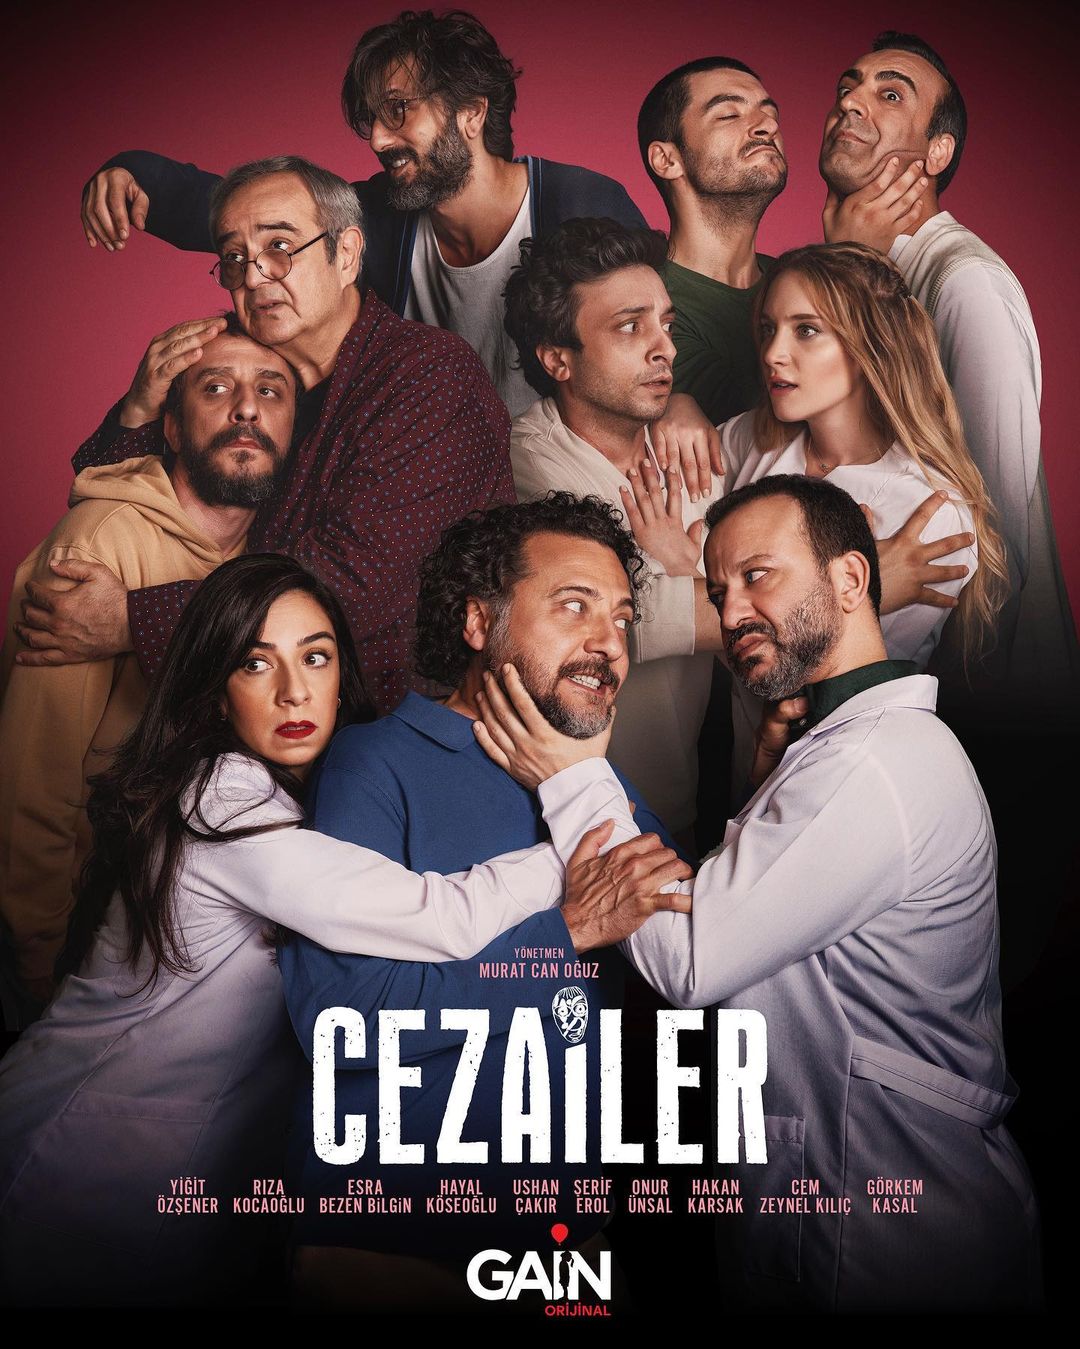 TV ratings for Cezailer in Chile. Gain TV series